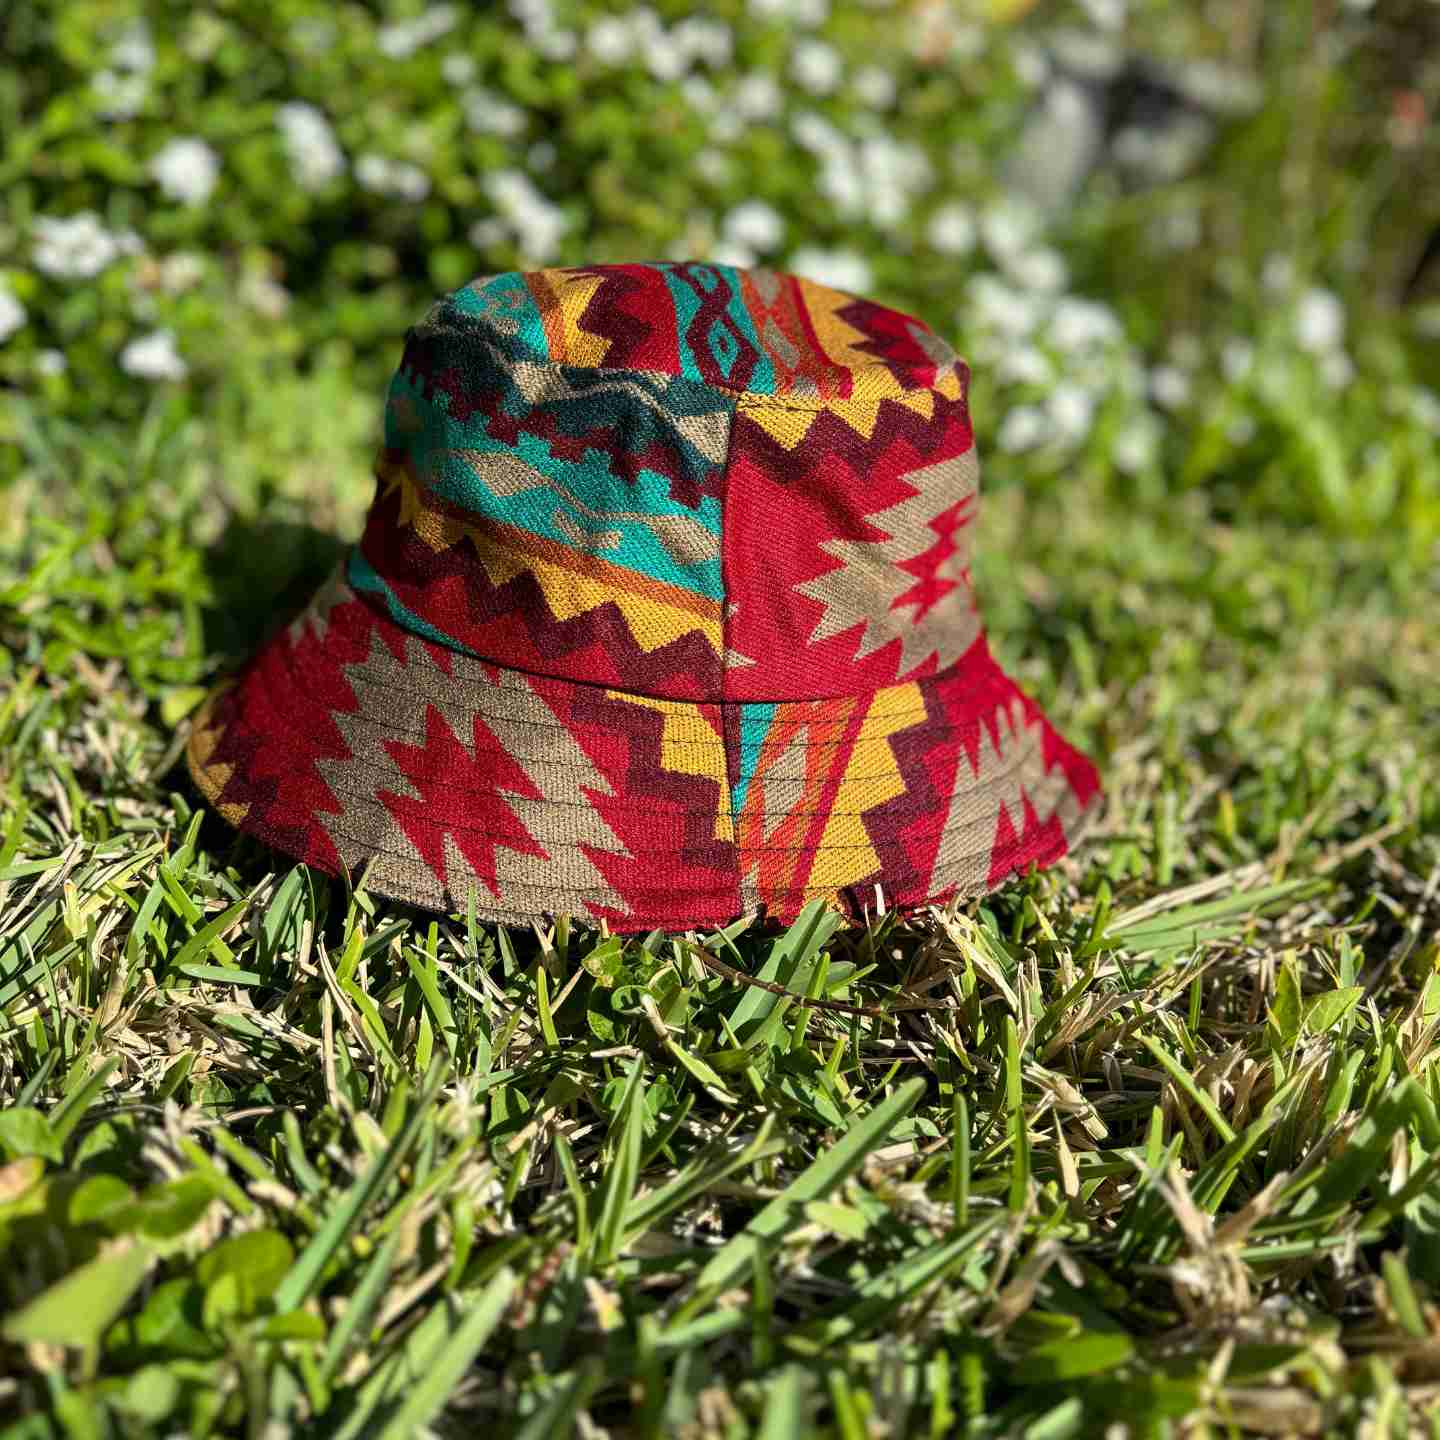 Unisex Bucket Hat for Festivals and Beach Days